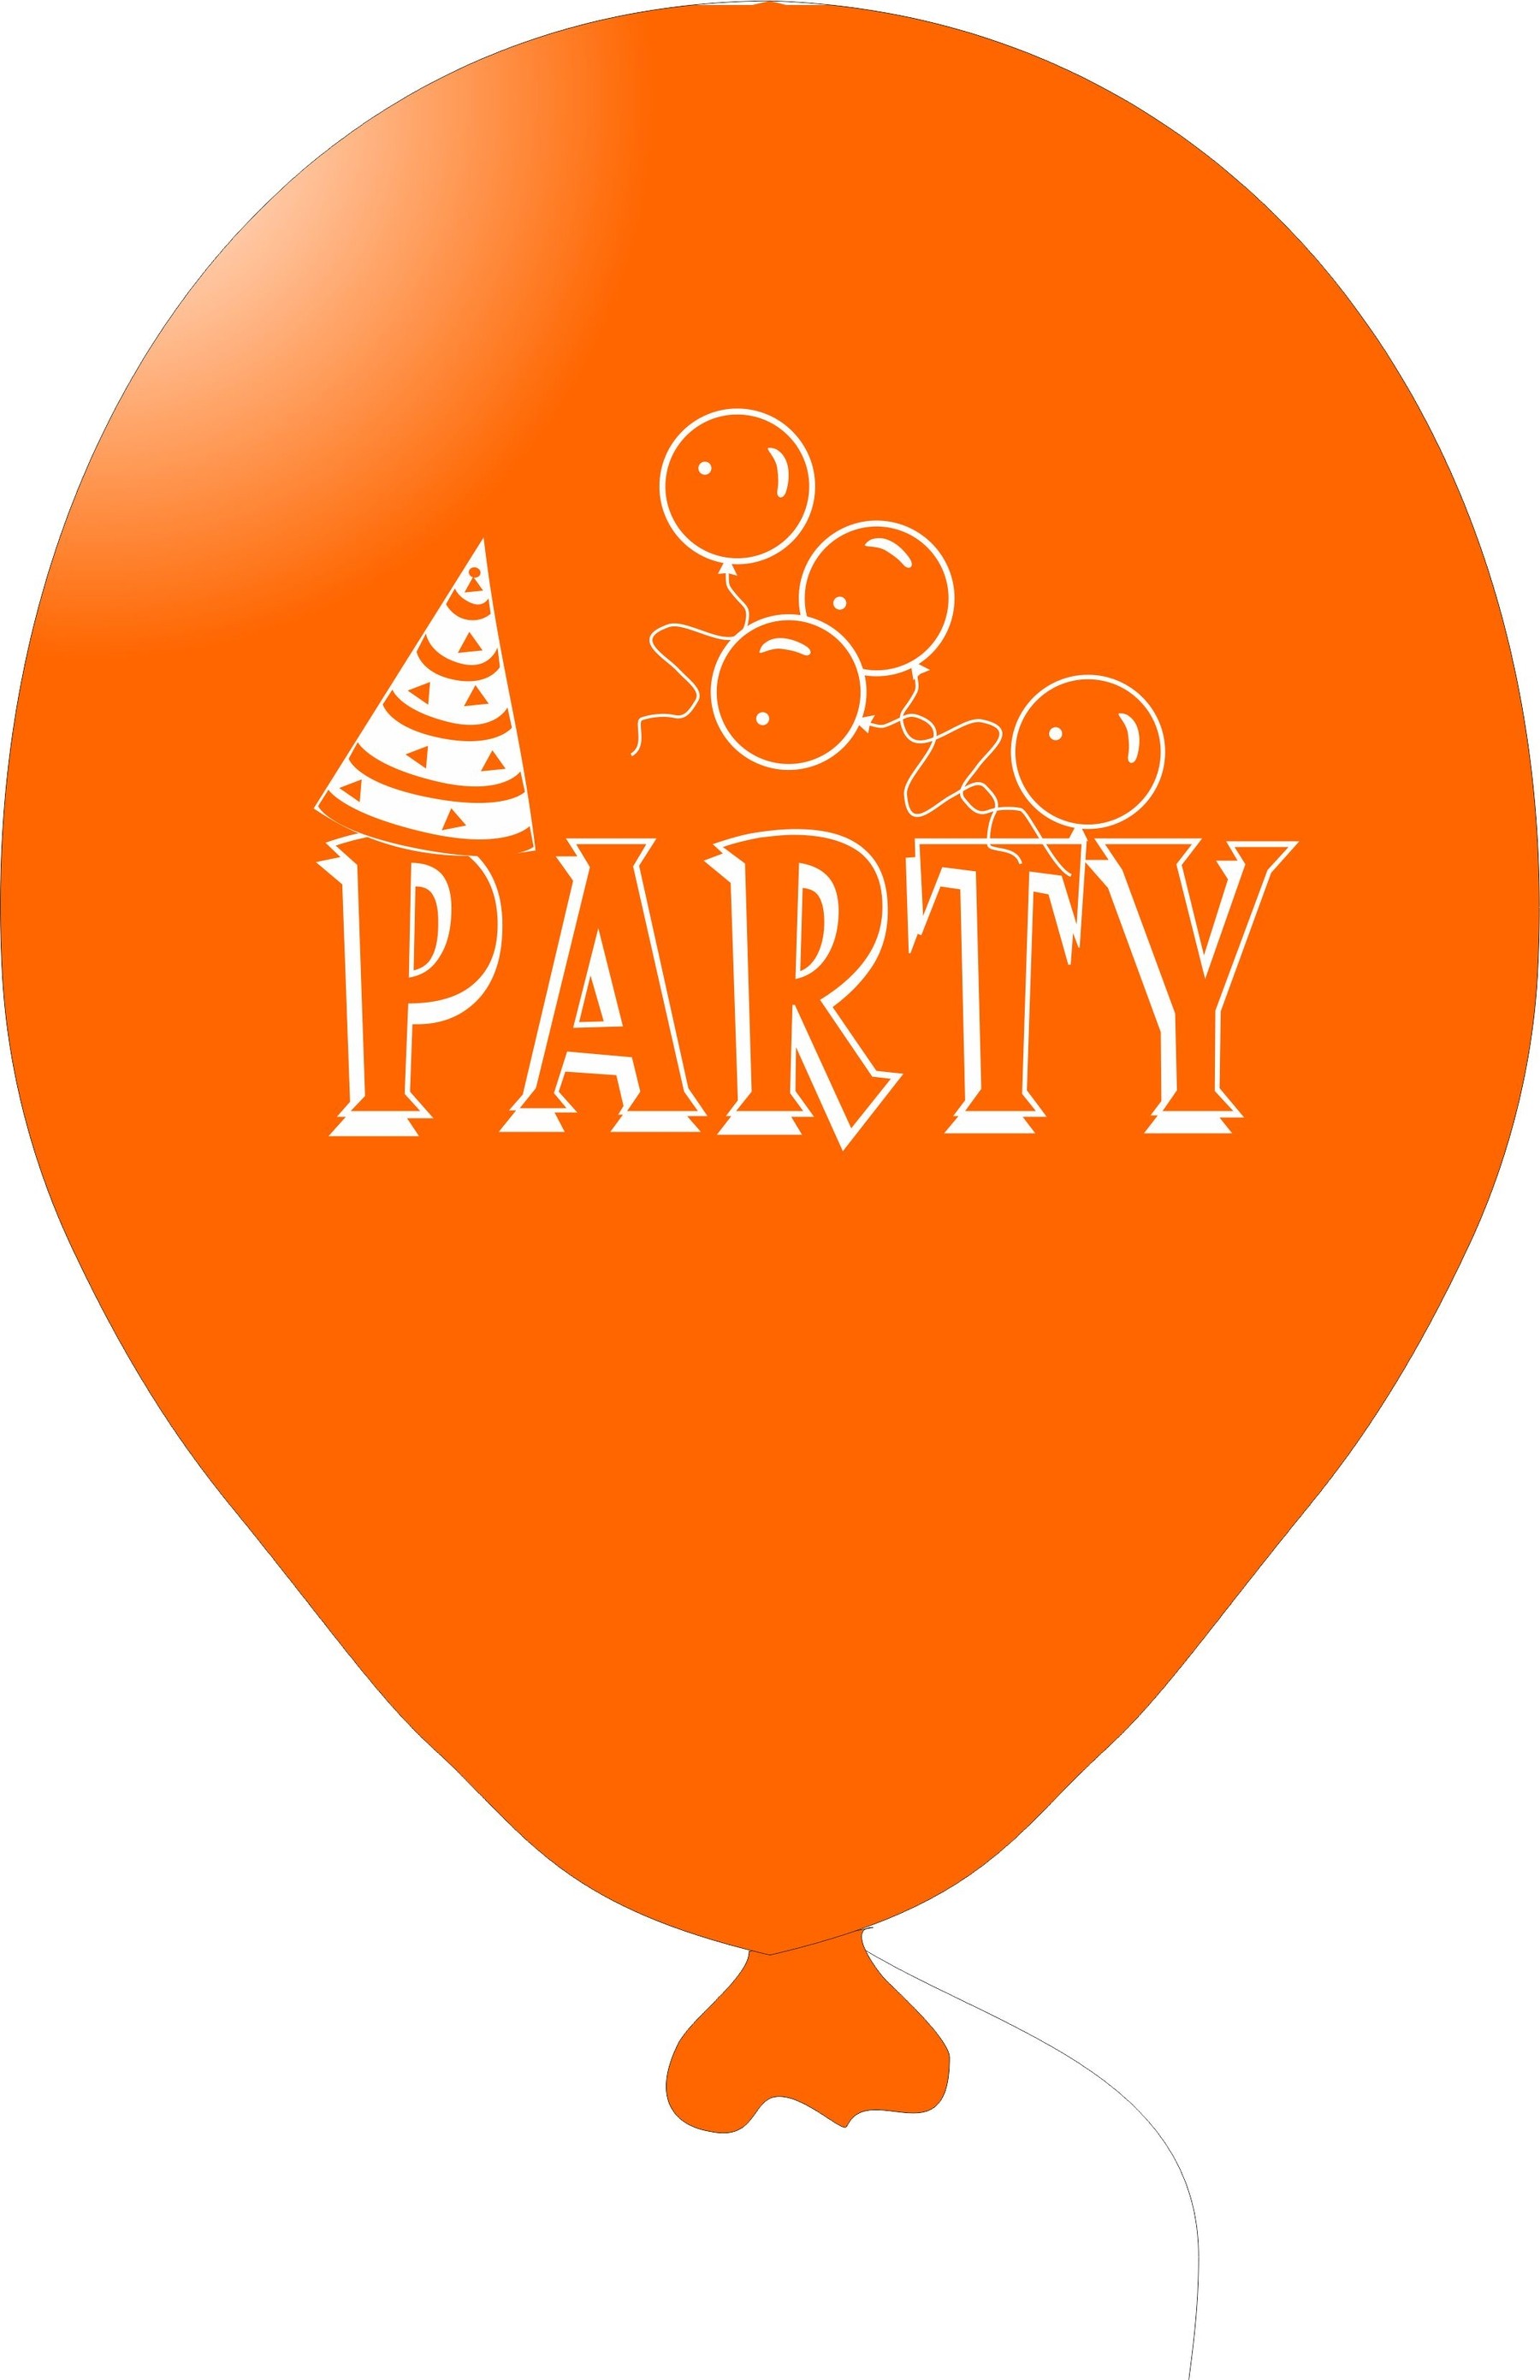 Balónky PARTY oranžové 1 ks